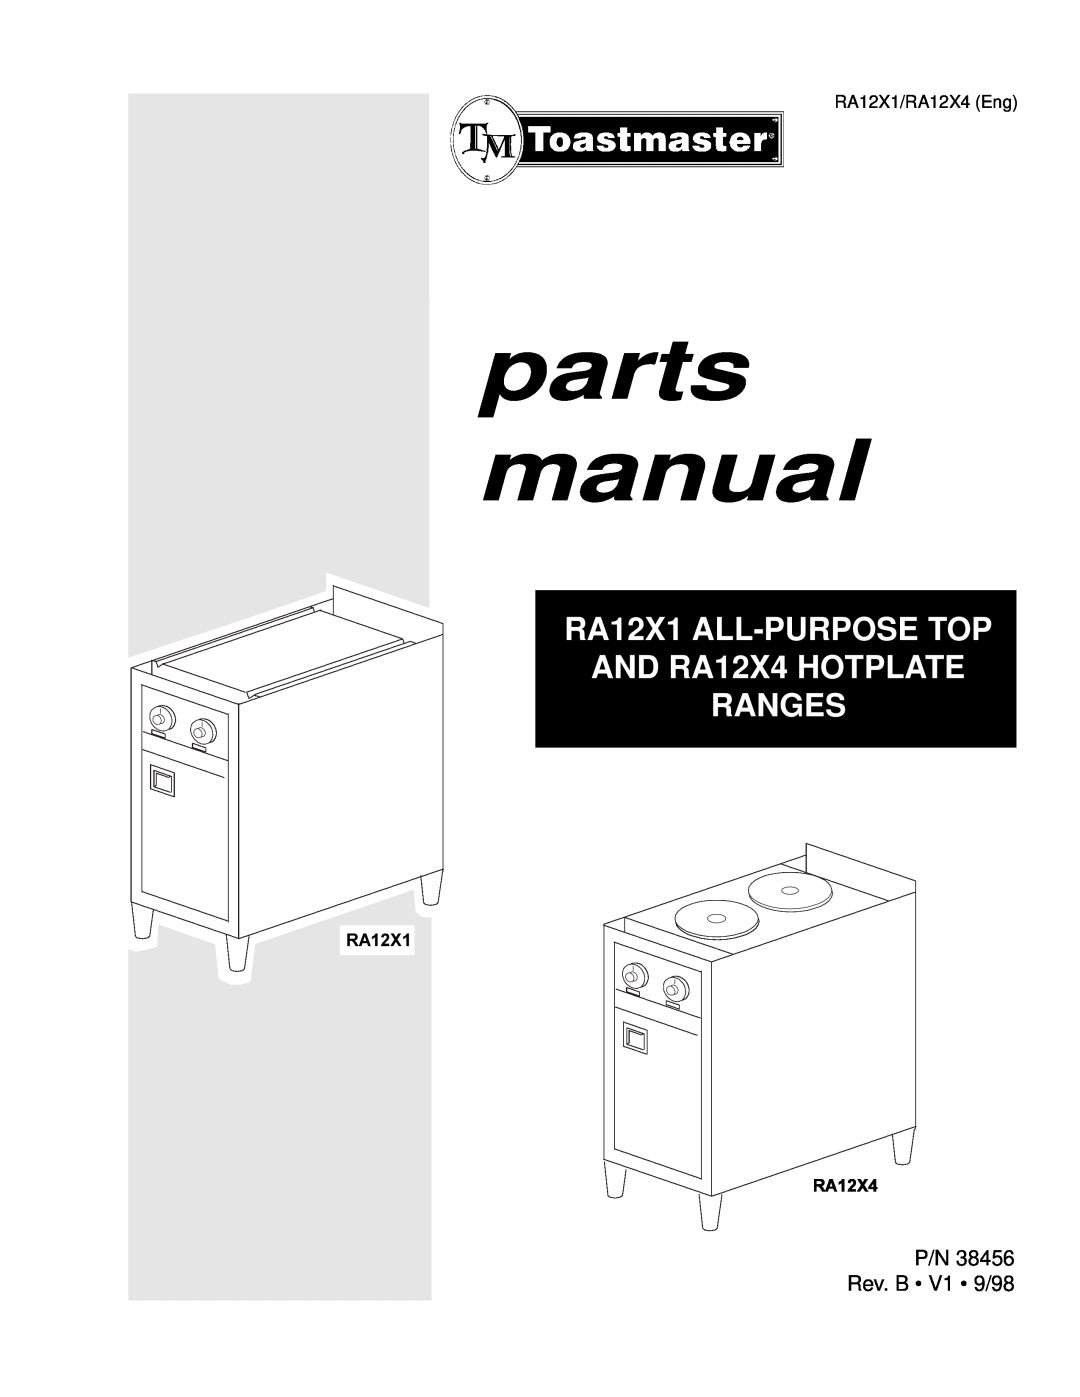 Toastmaster manual RA12X1 RA12X4, parts manual, RA12X1 ALL-PURPOSETOP AND RA12X4 HOTPLATE RANGES 